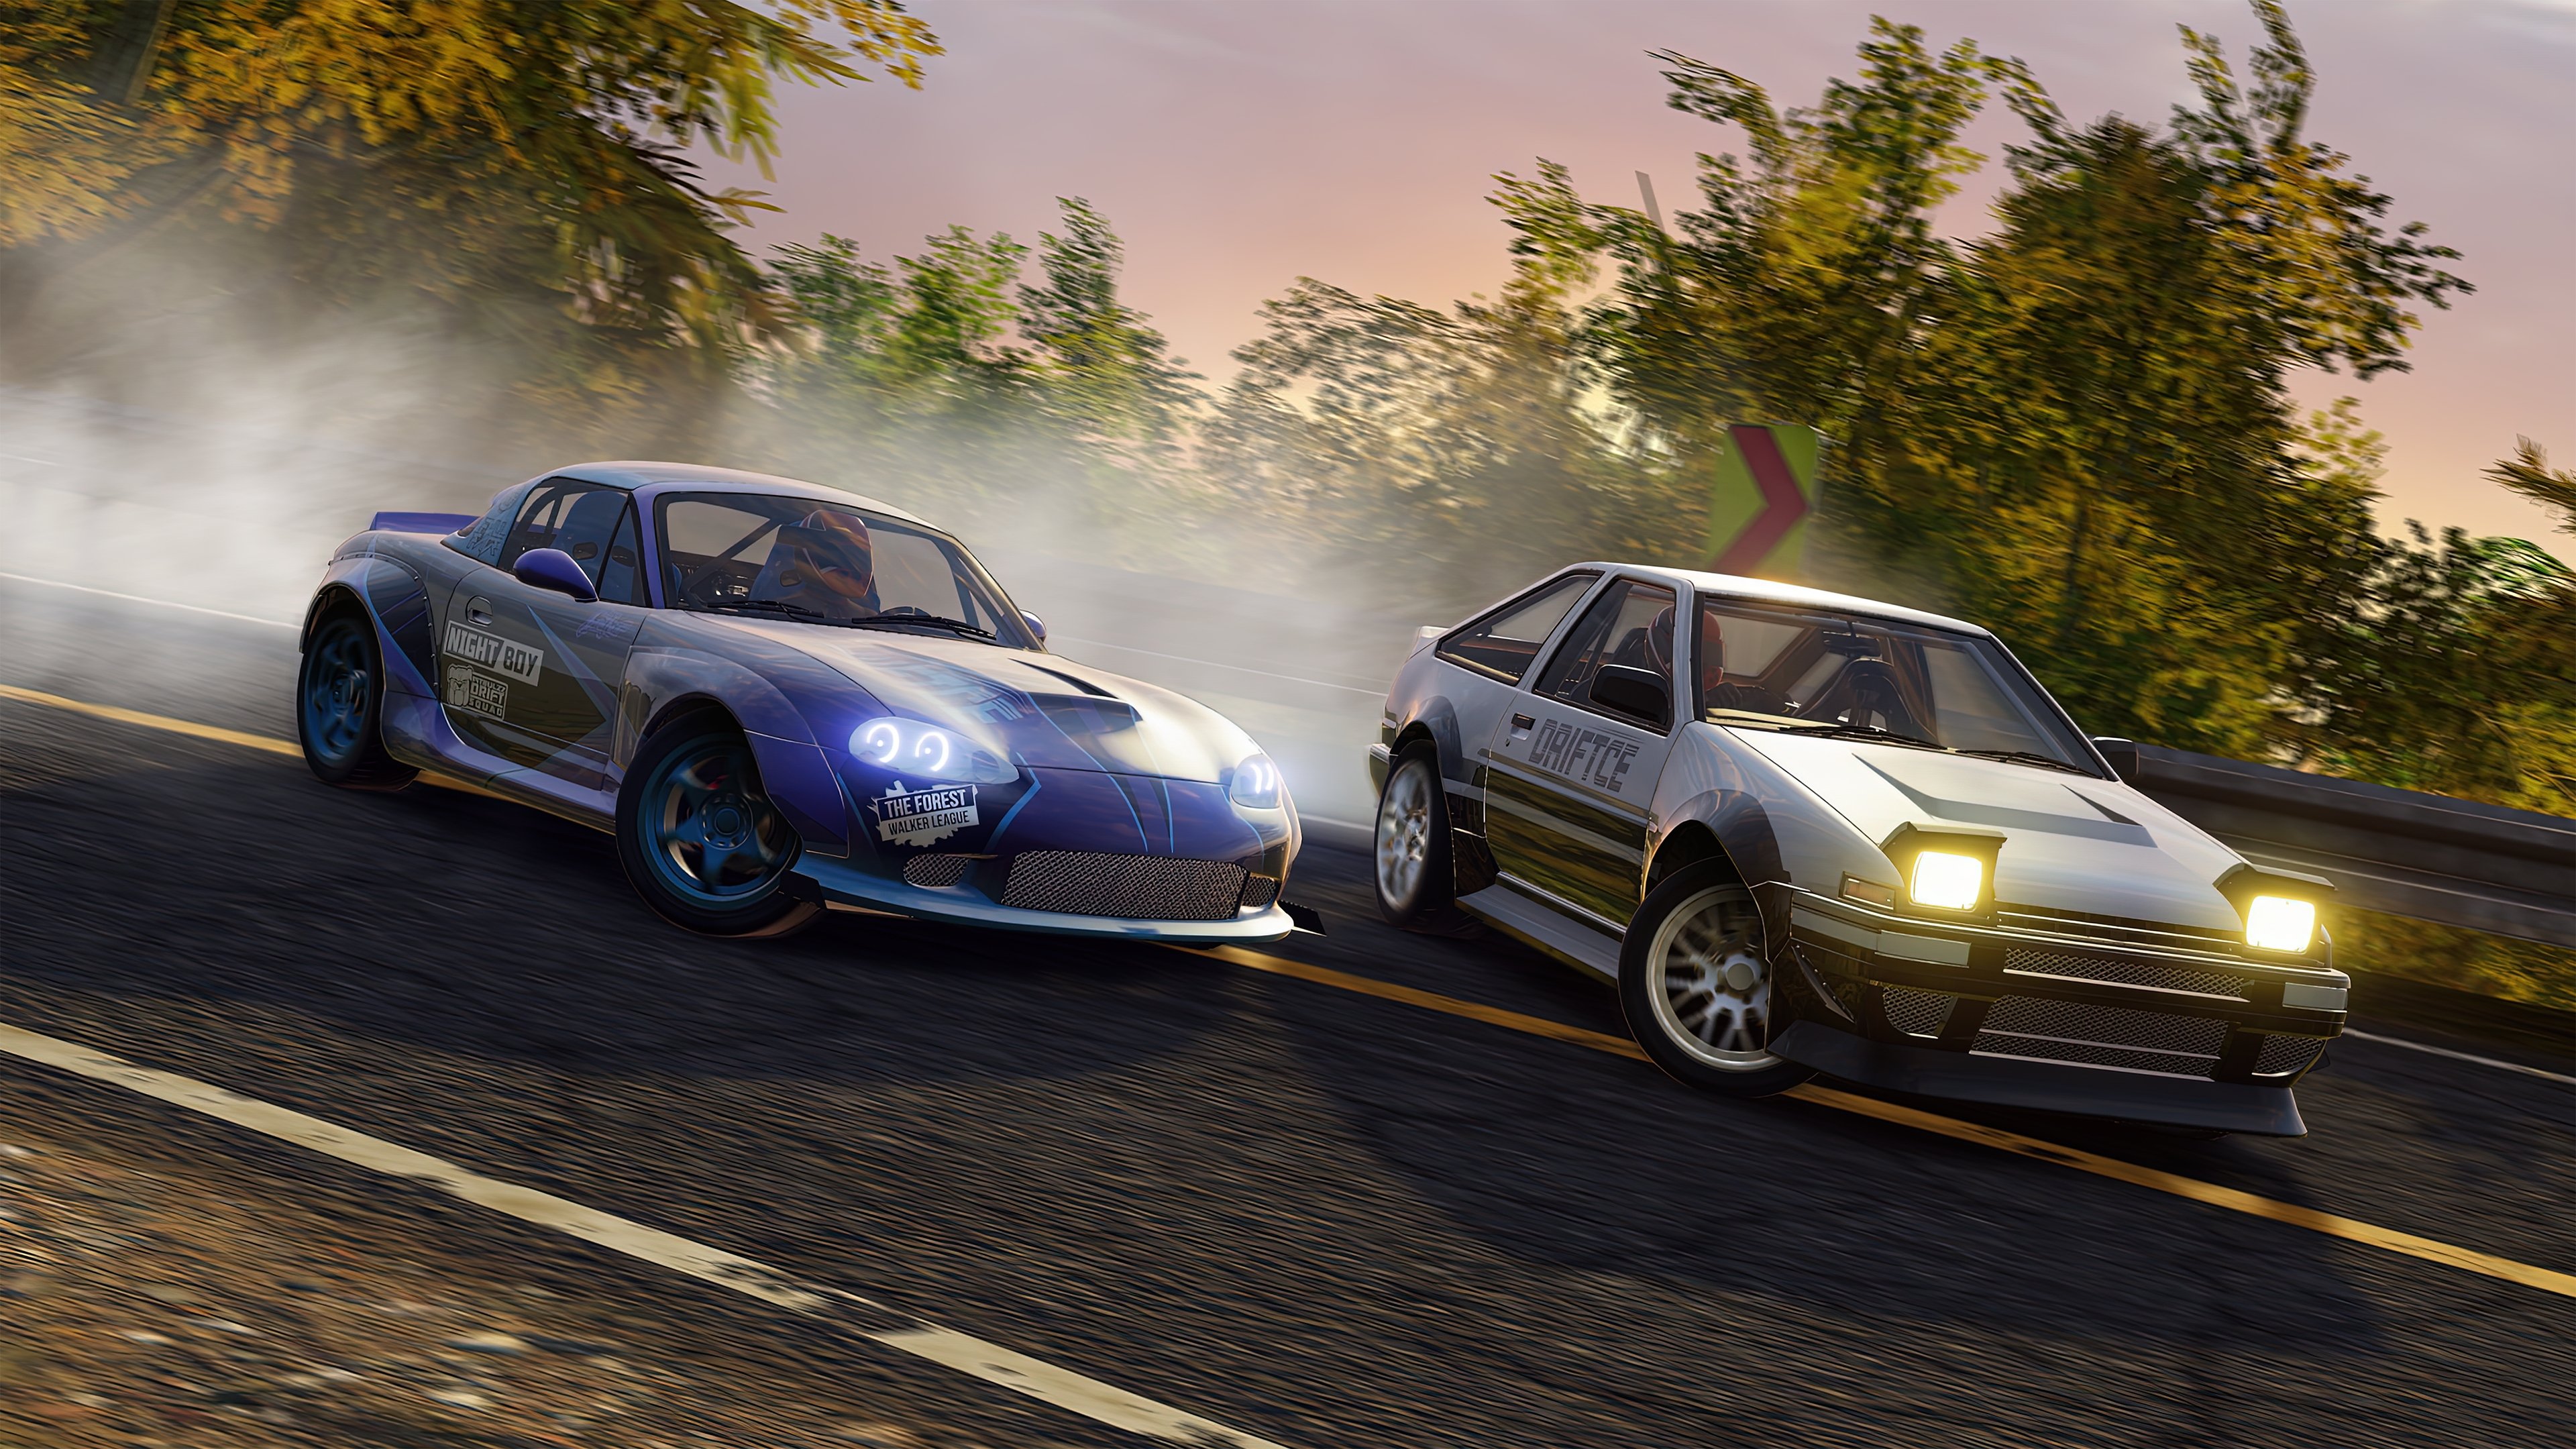 Realistic drifting simulator CarX Drift Racing Online arrives on Xbox One